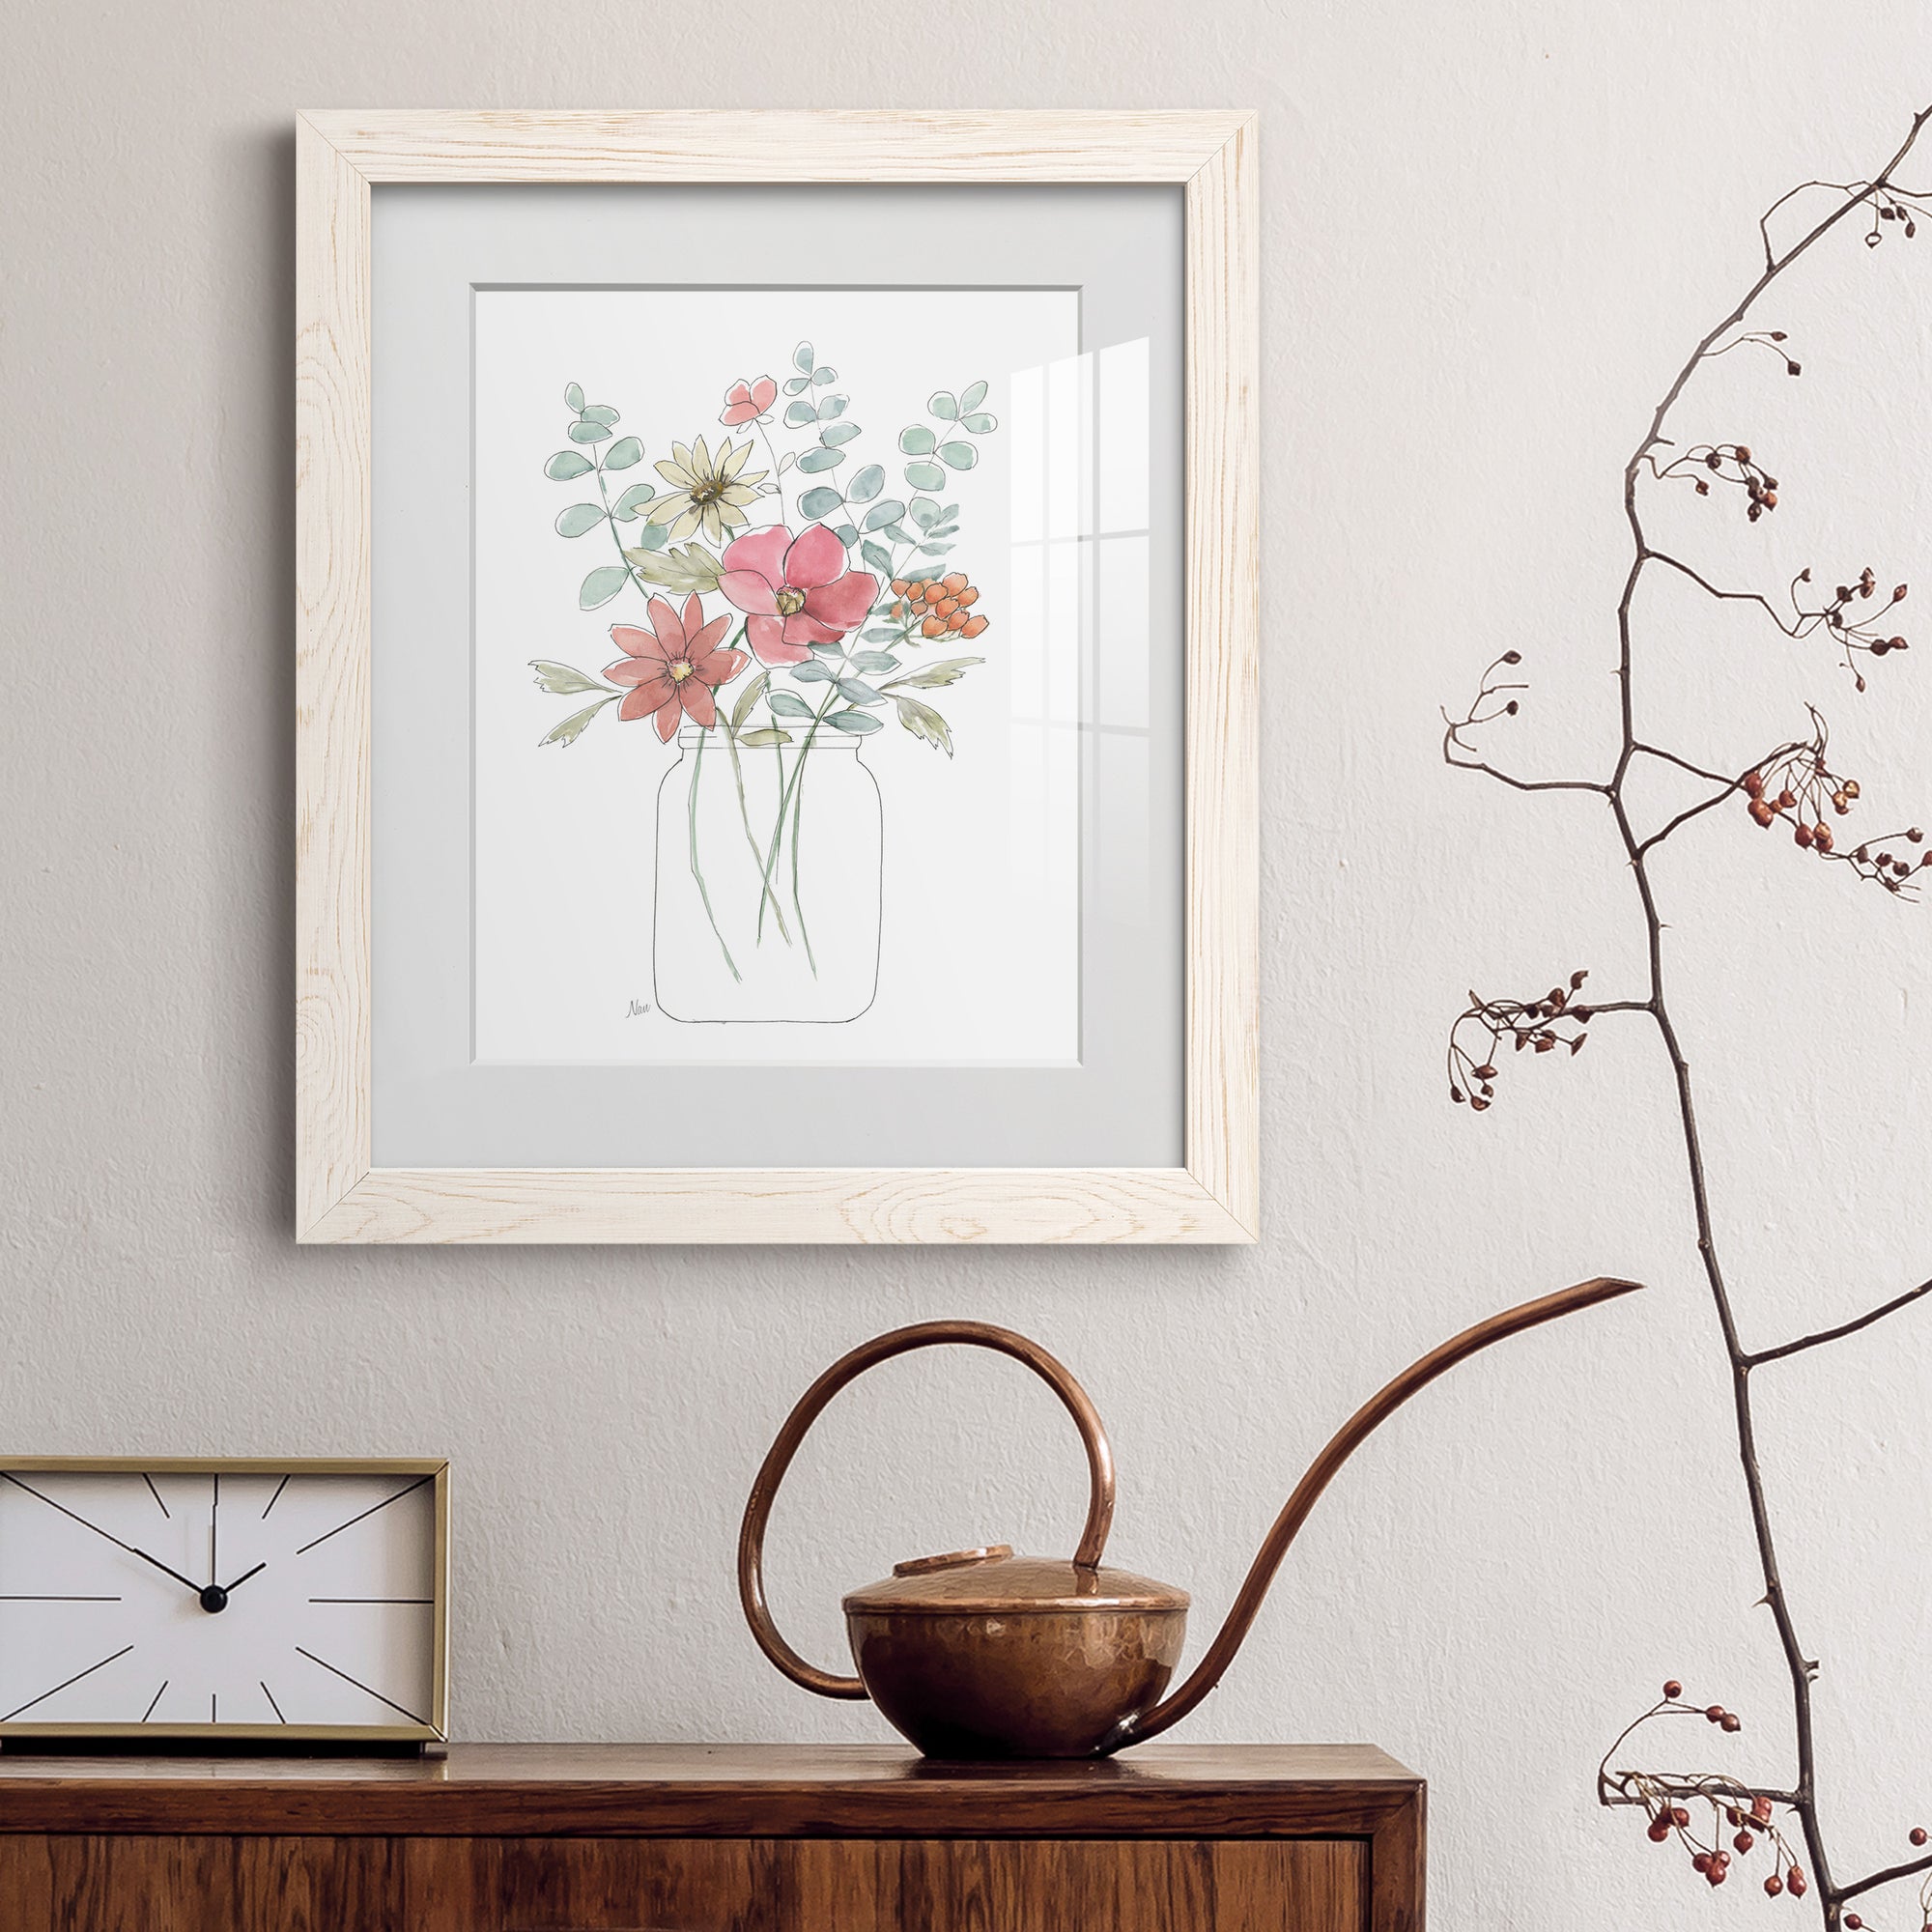 Whimsical Wildflowers II - Premium Framed Print - Distressed Barnwood Frame - Ready to Hang